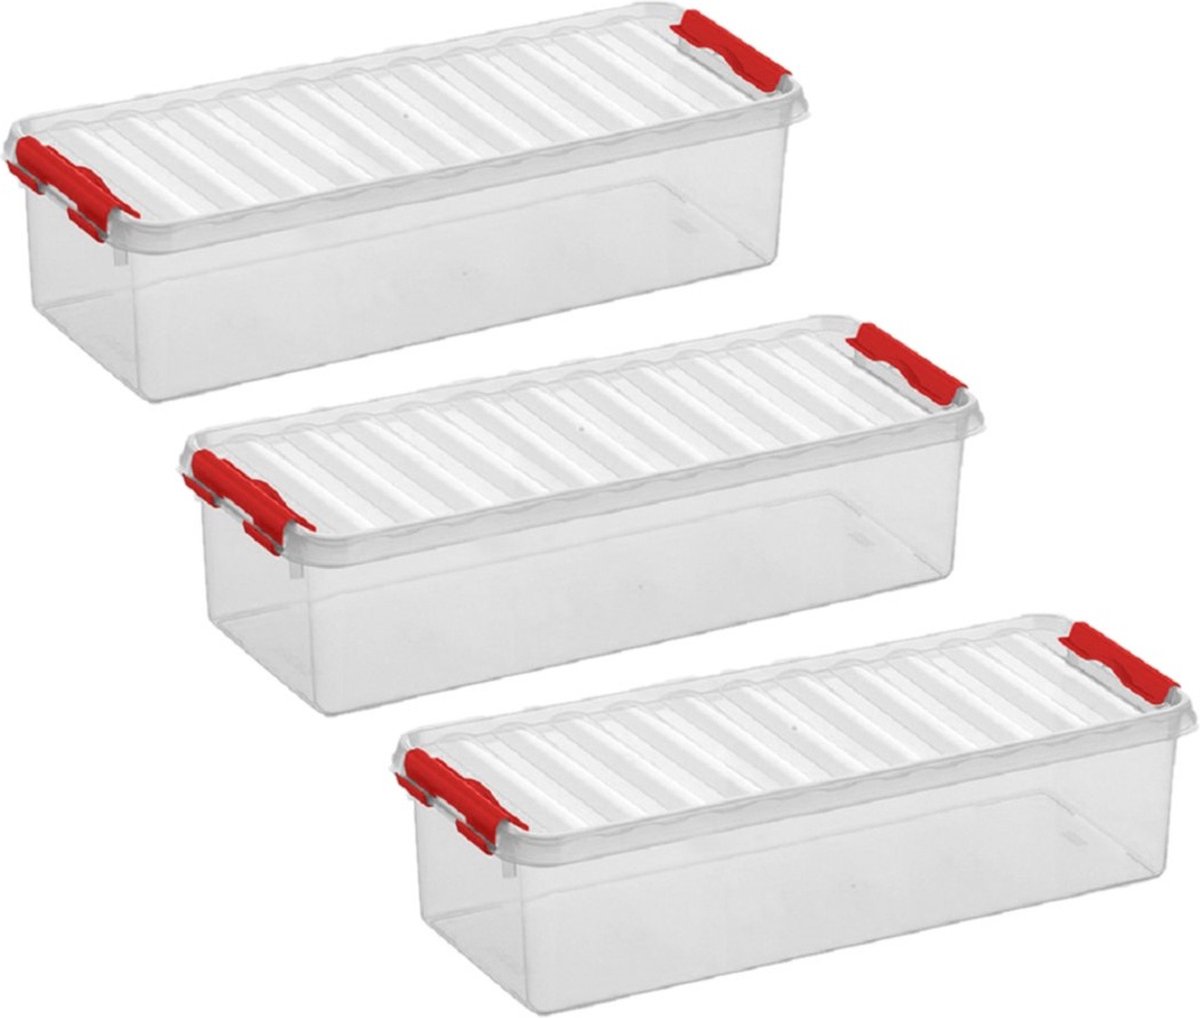 5x stuks opberg box/opbergdoos 3.5 liter 38.5 x 14 x 9.2 cm - Opslagbox - Opbergbak kunststof transparant/rood